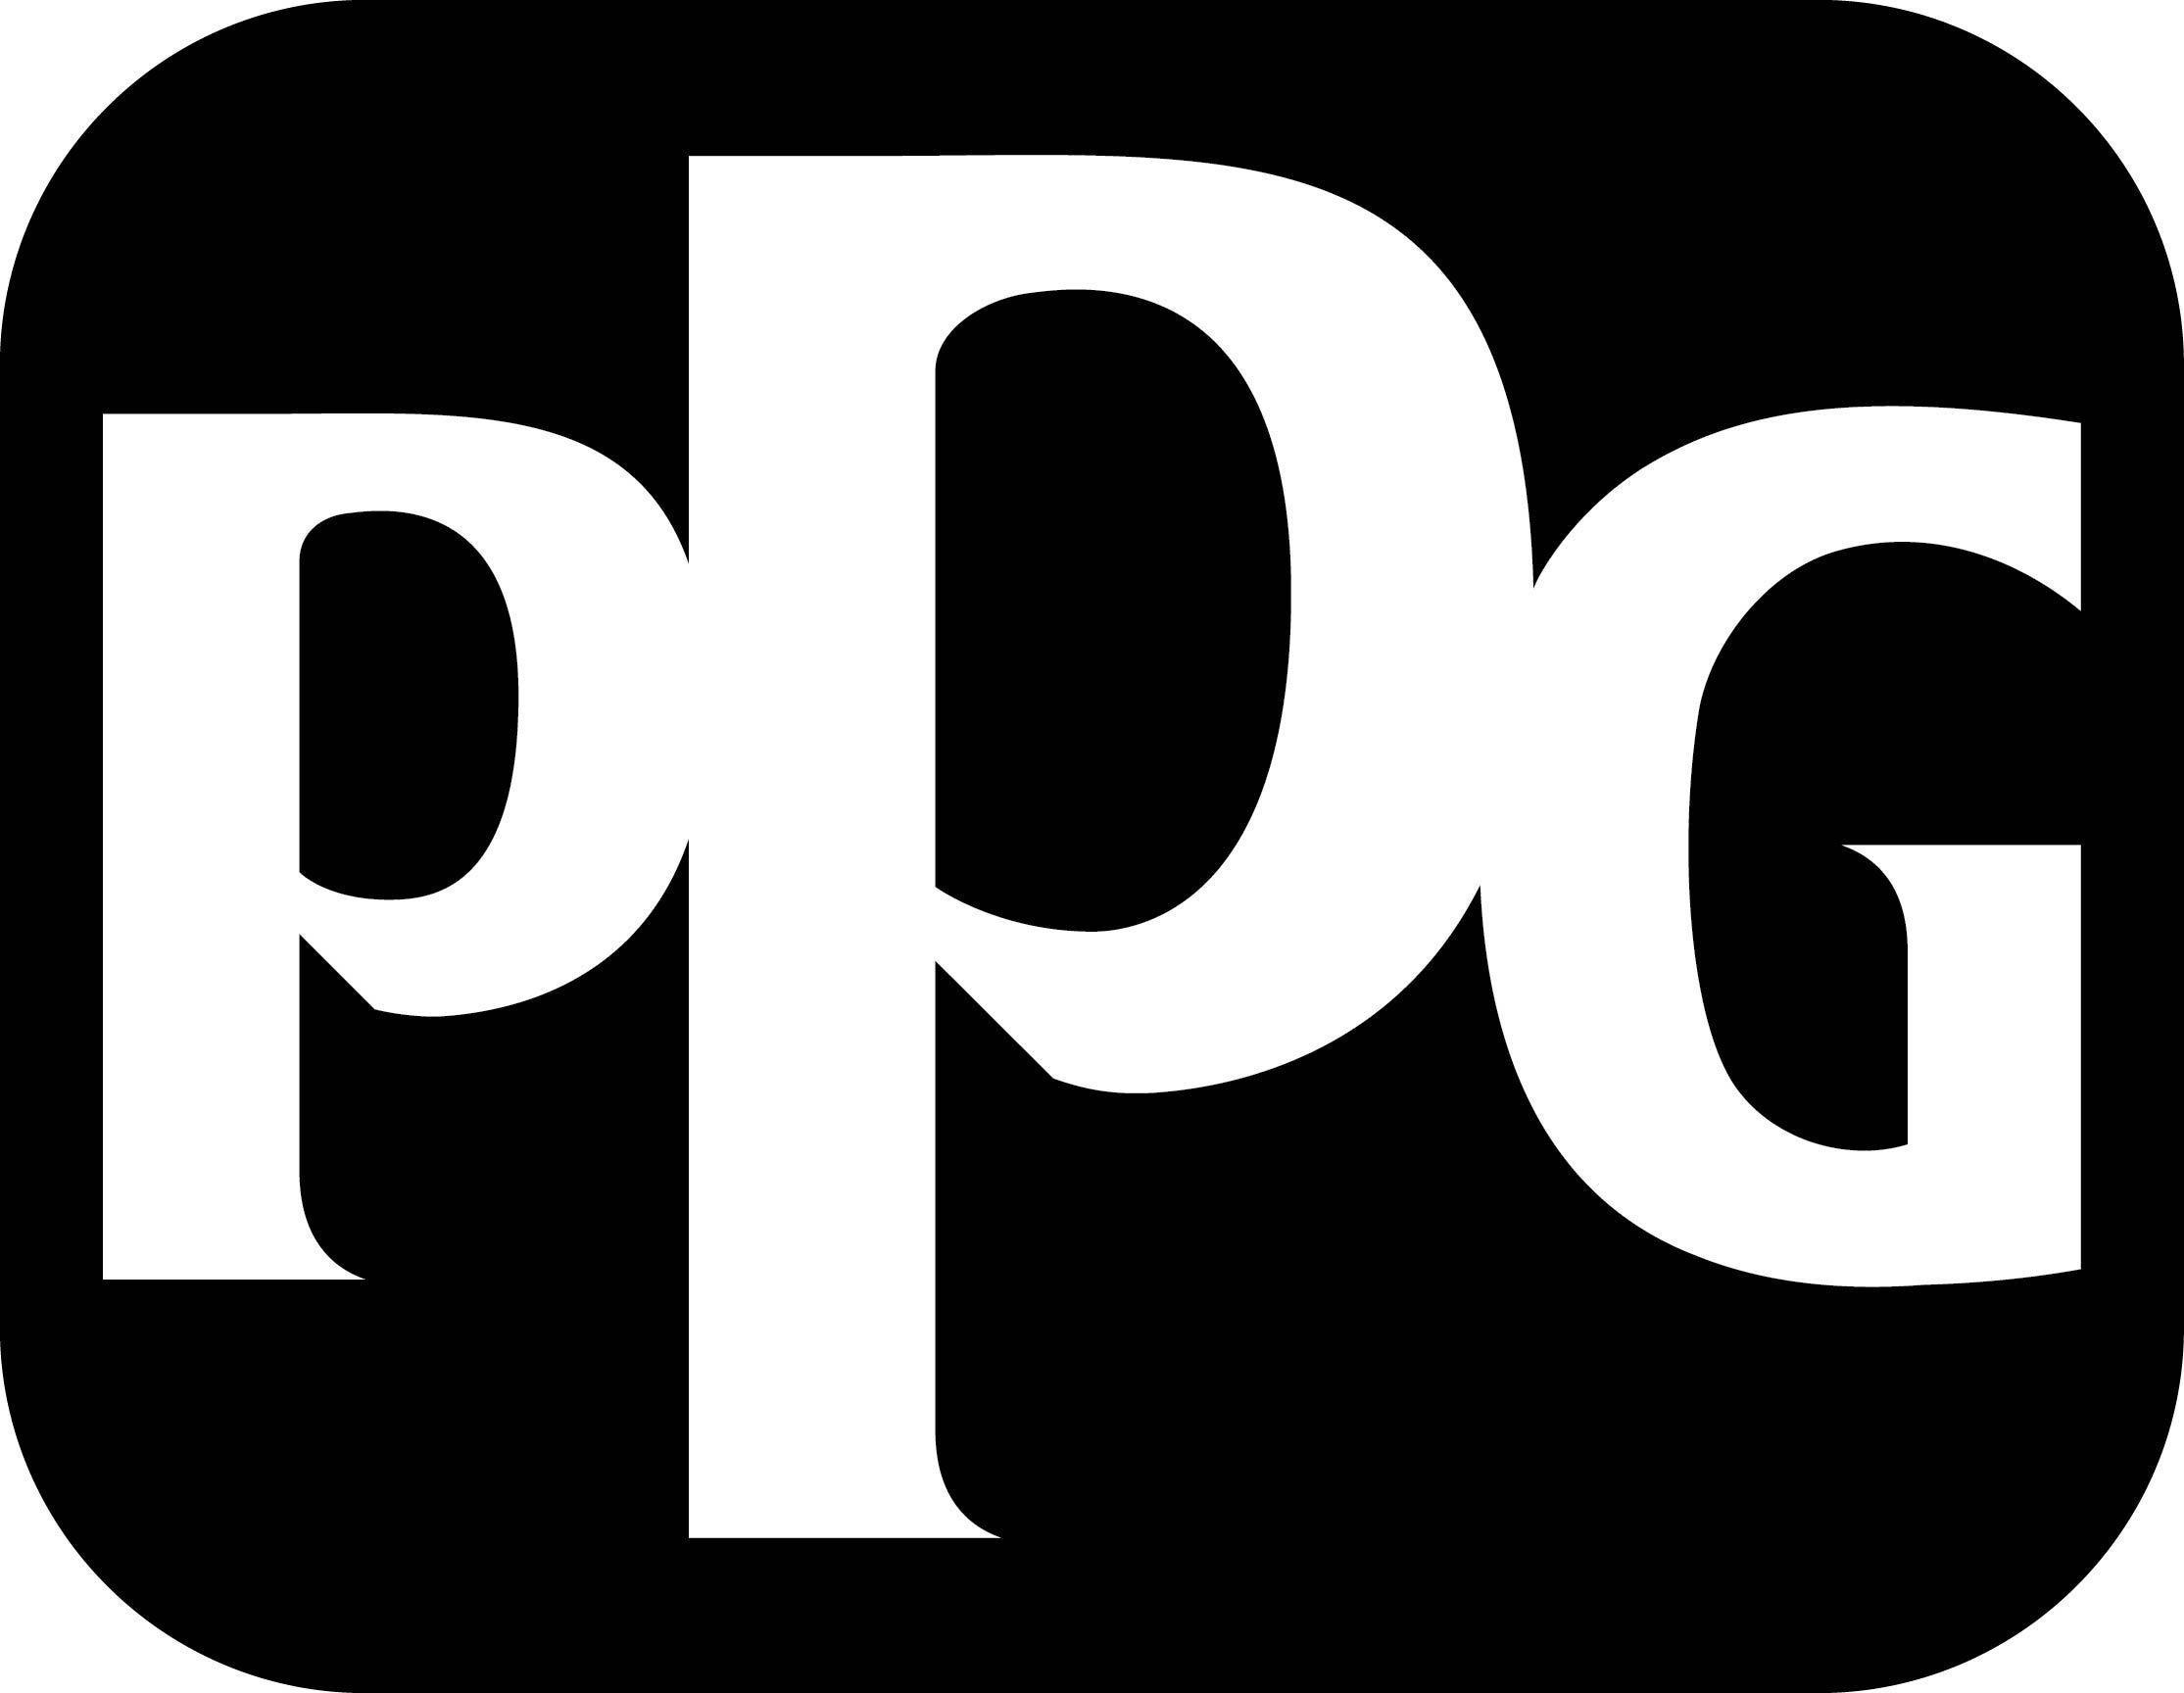 PPG Logo - PPG PAINTS™ 2017 MARKETING PLANNER